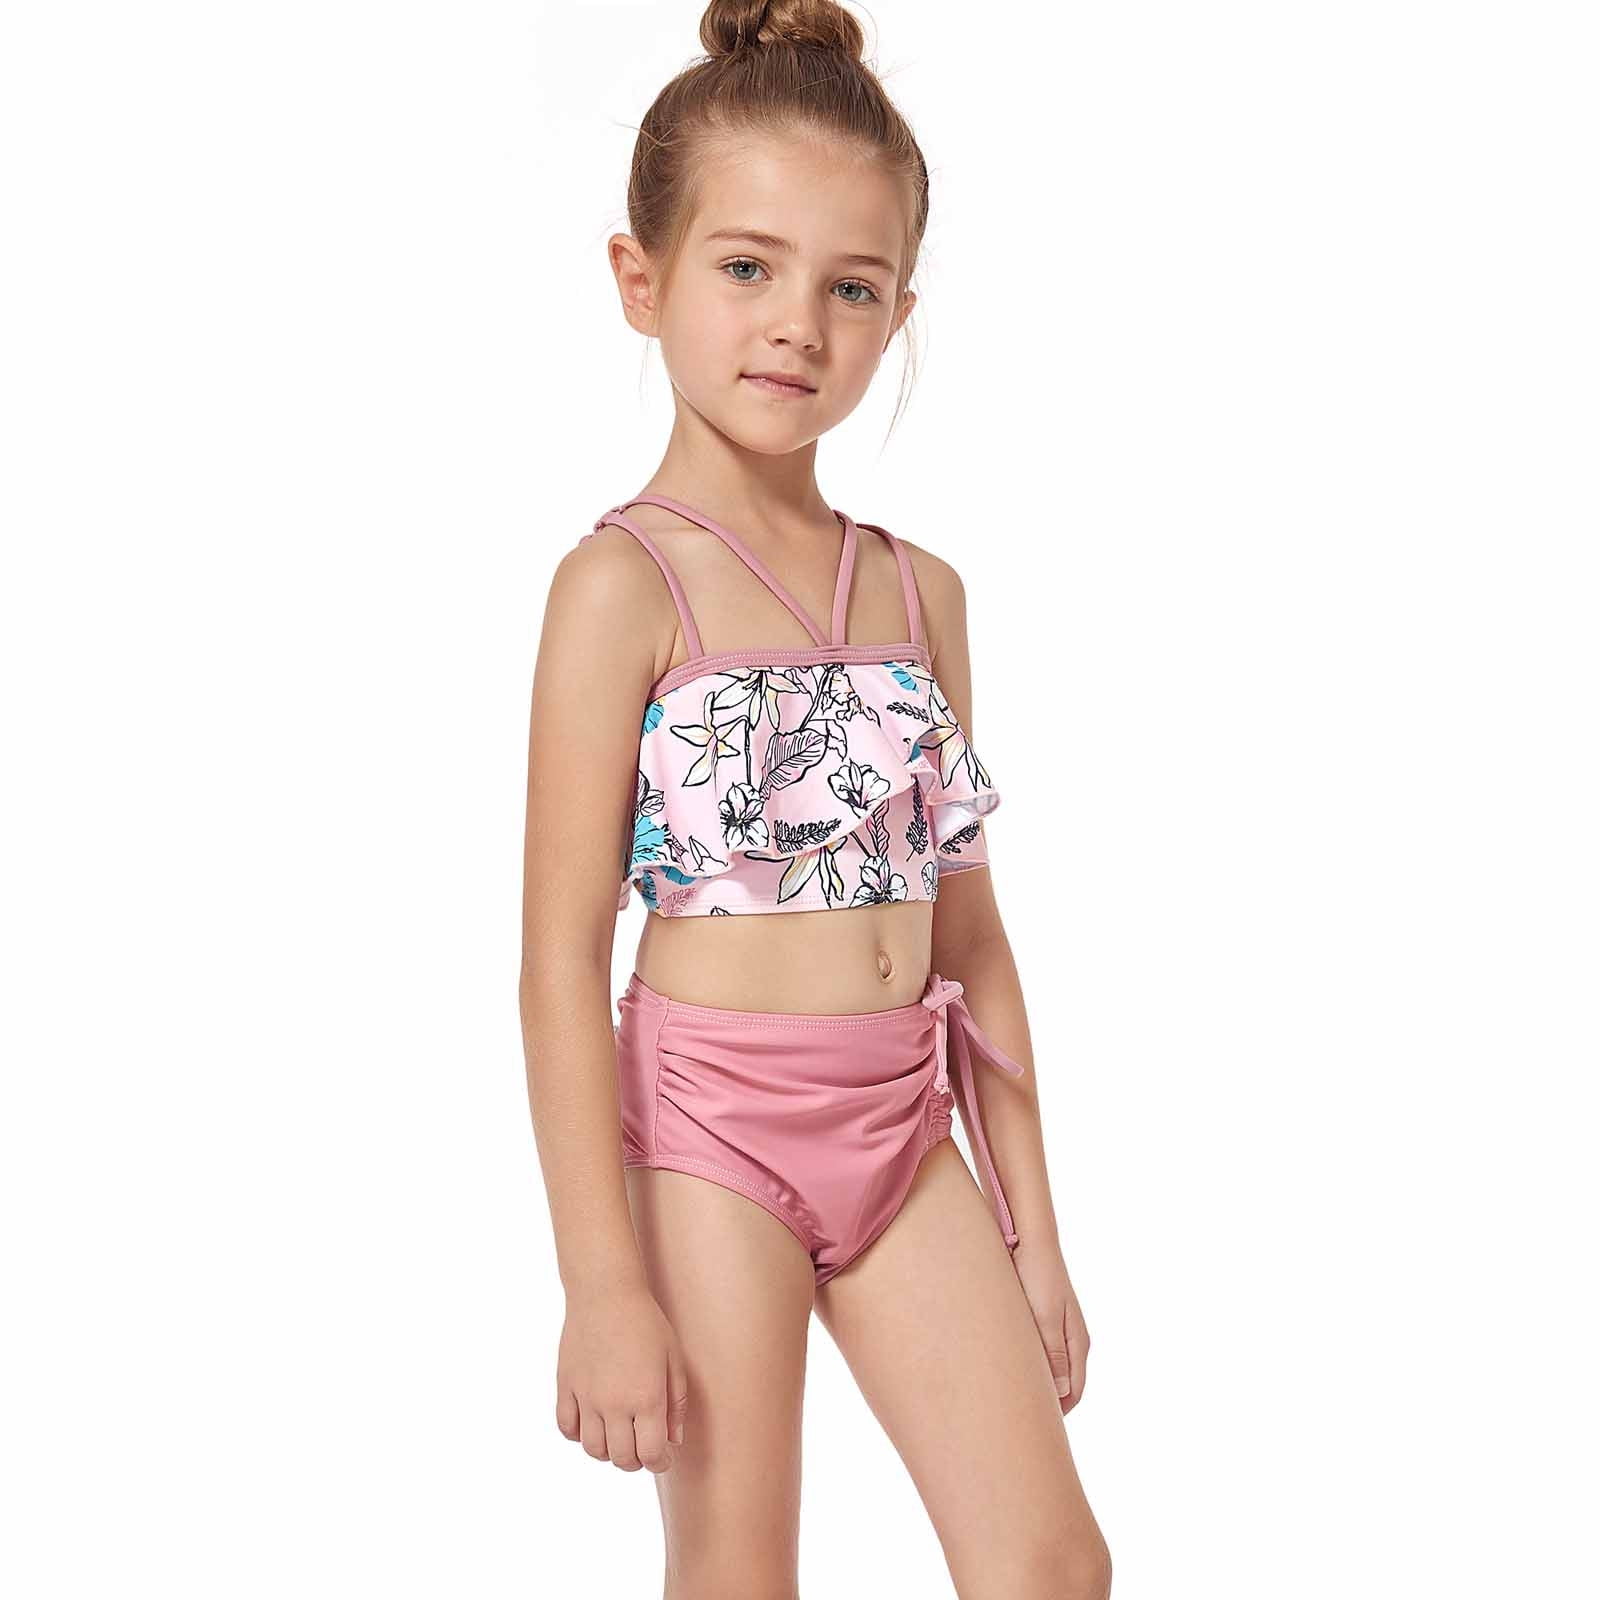 Holiday Savings Deals! Kukoosong Girls Swimsuit Little Girl Bikinis Toddler  High Waist Drawcord Printed Split Suit Pink 7-8 Years